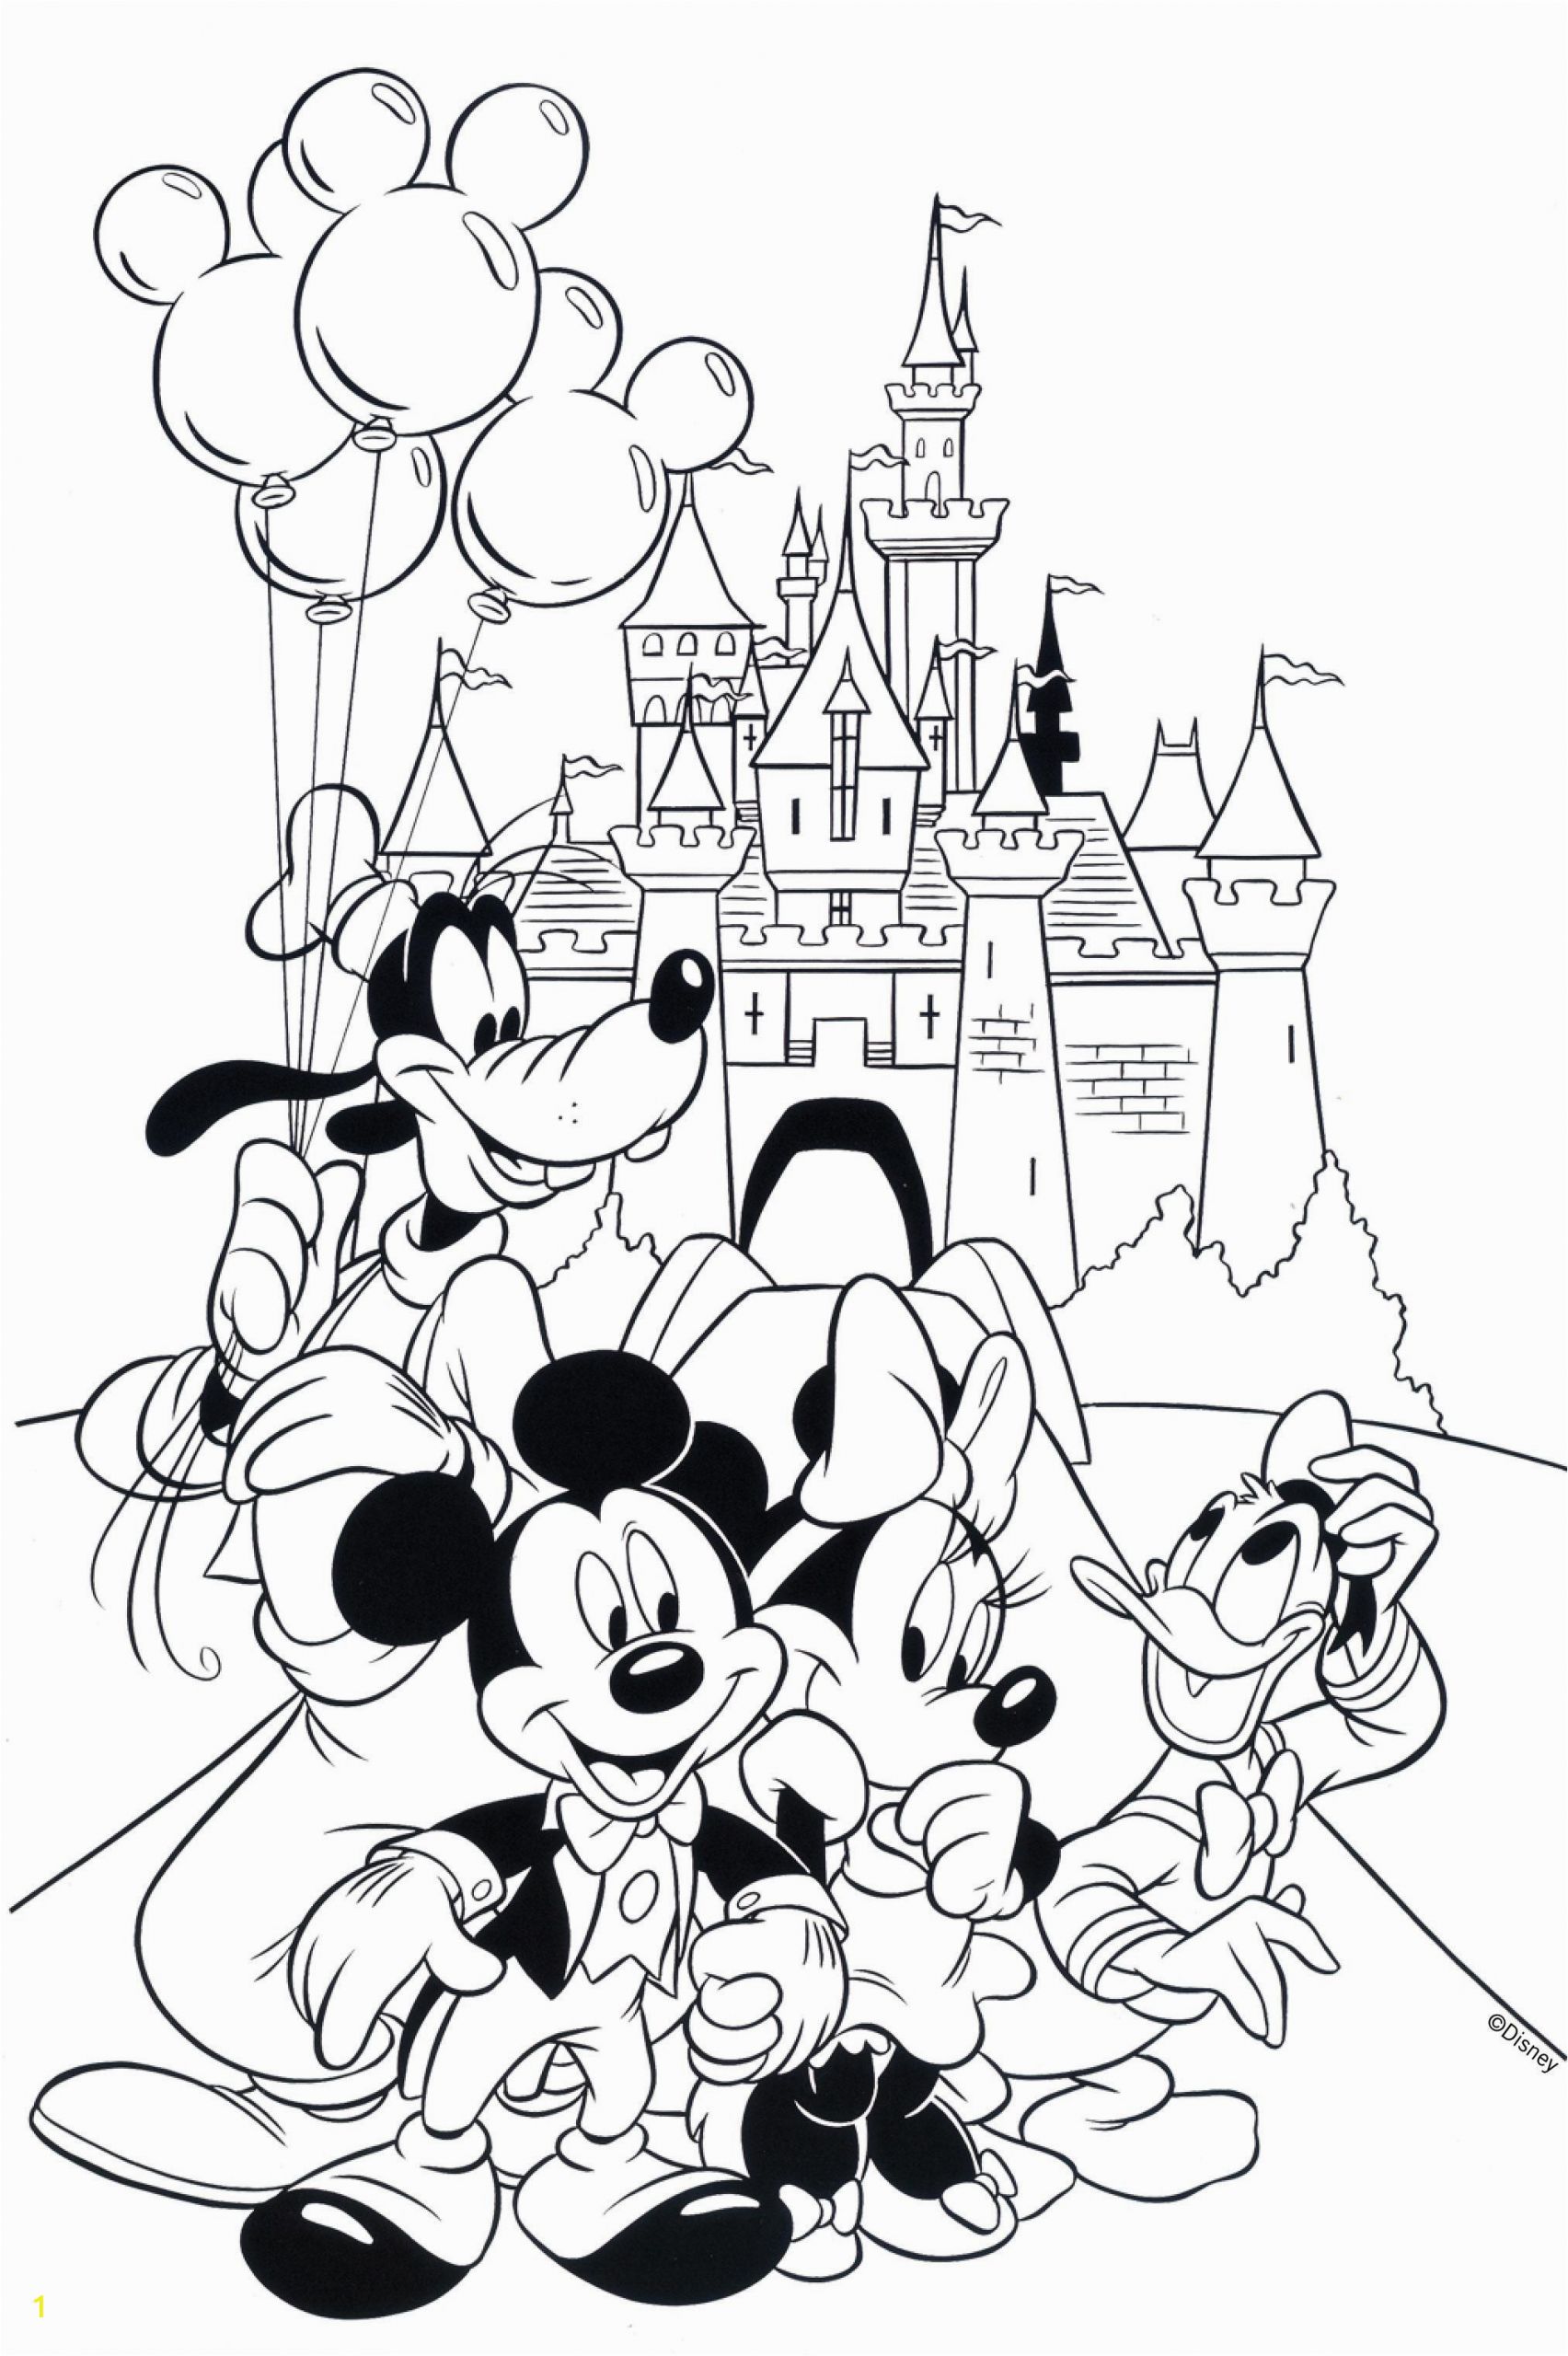 Disney World Castle Coloring Pages Free Children S Colouring In Ð² 2020 Ð³ Ñ